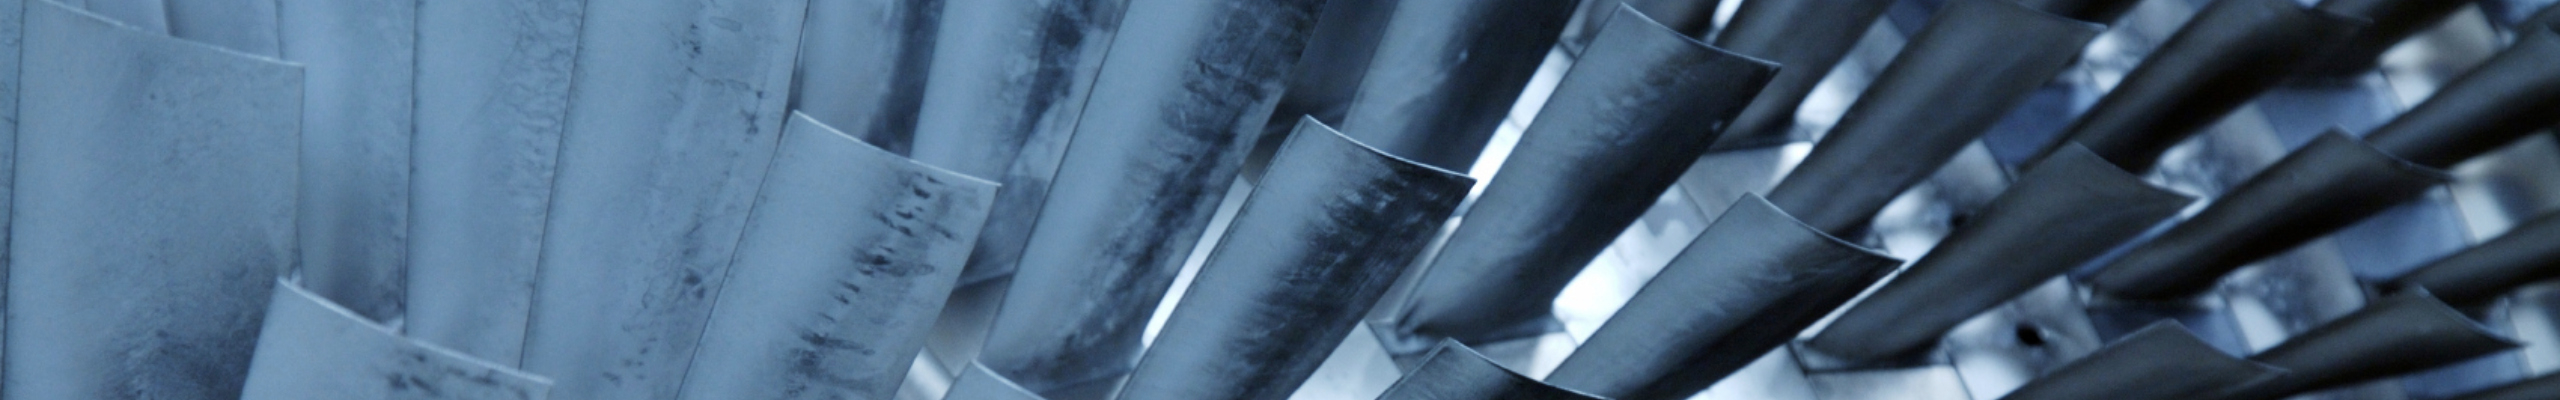 turbomachine fan blades